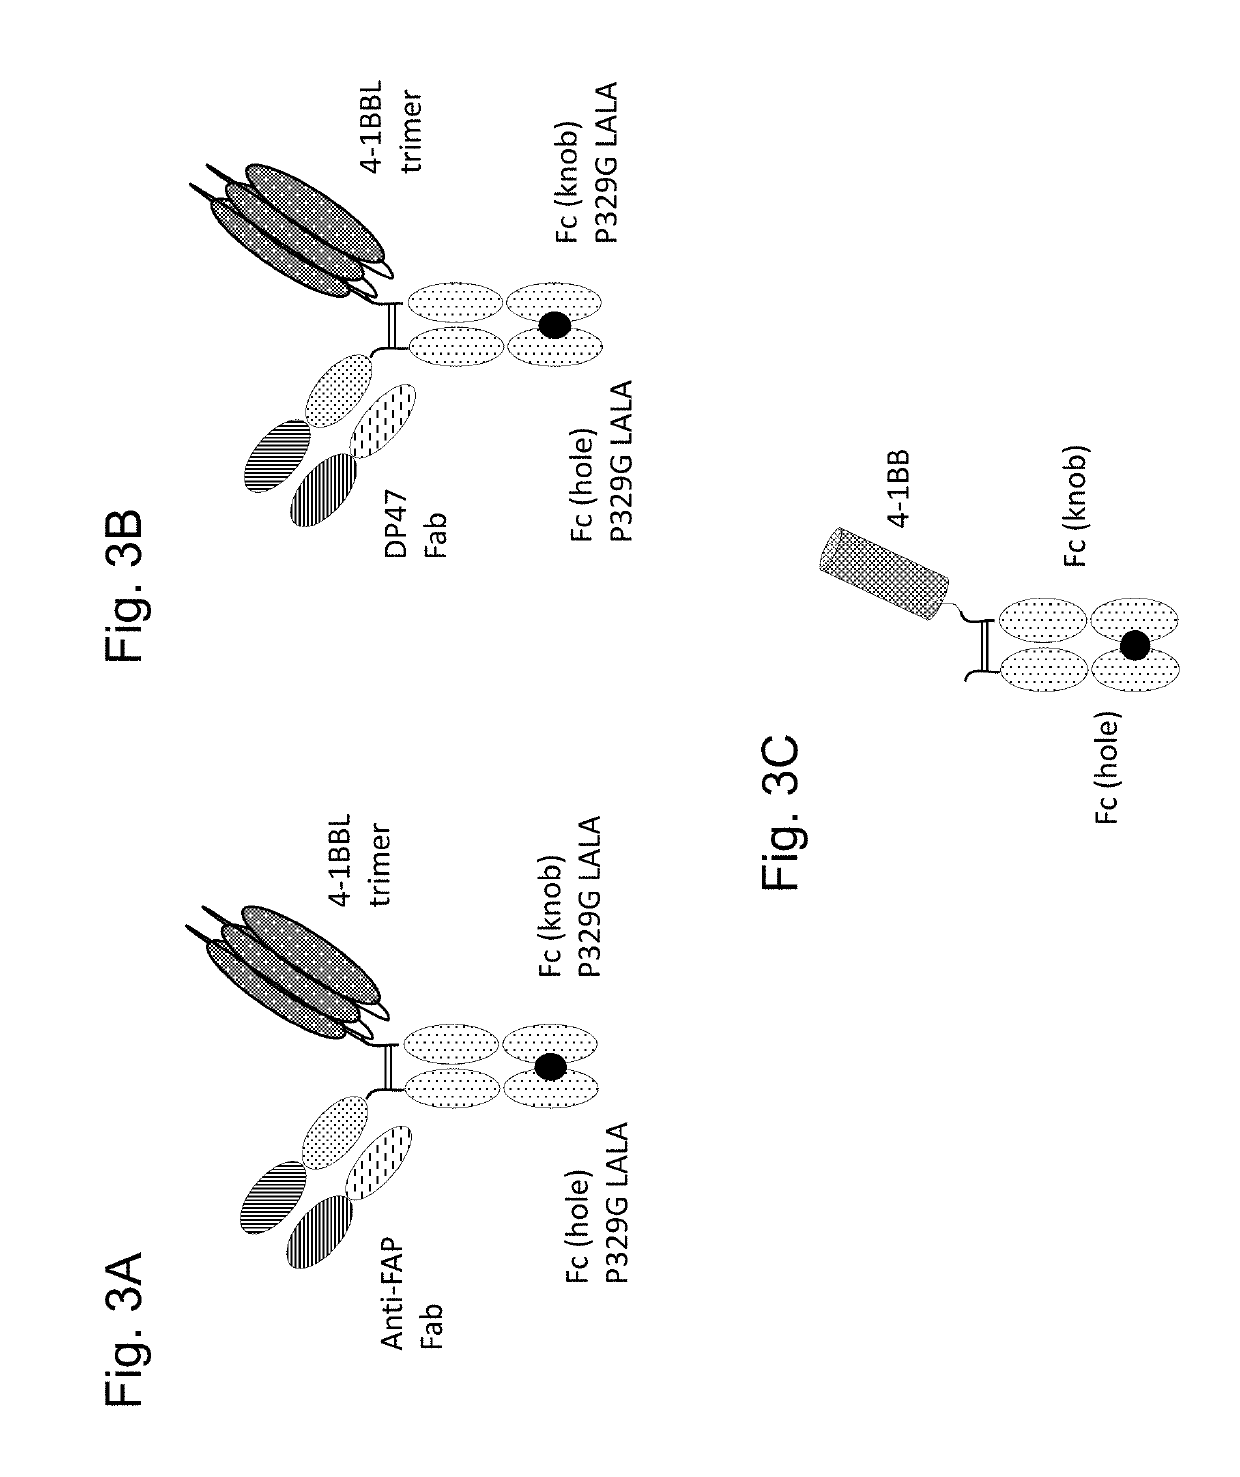 Tumor necrosis factor (TNF) family ligand trimer-containing antigen binding molecules